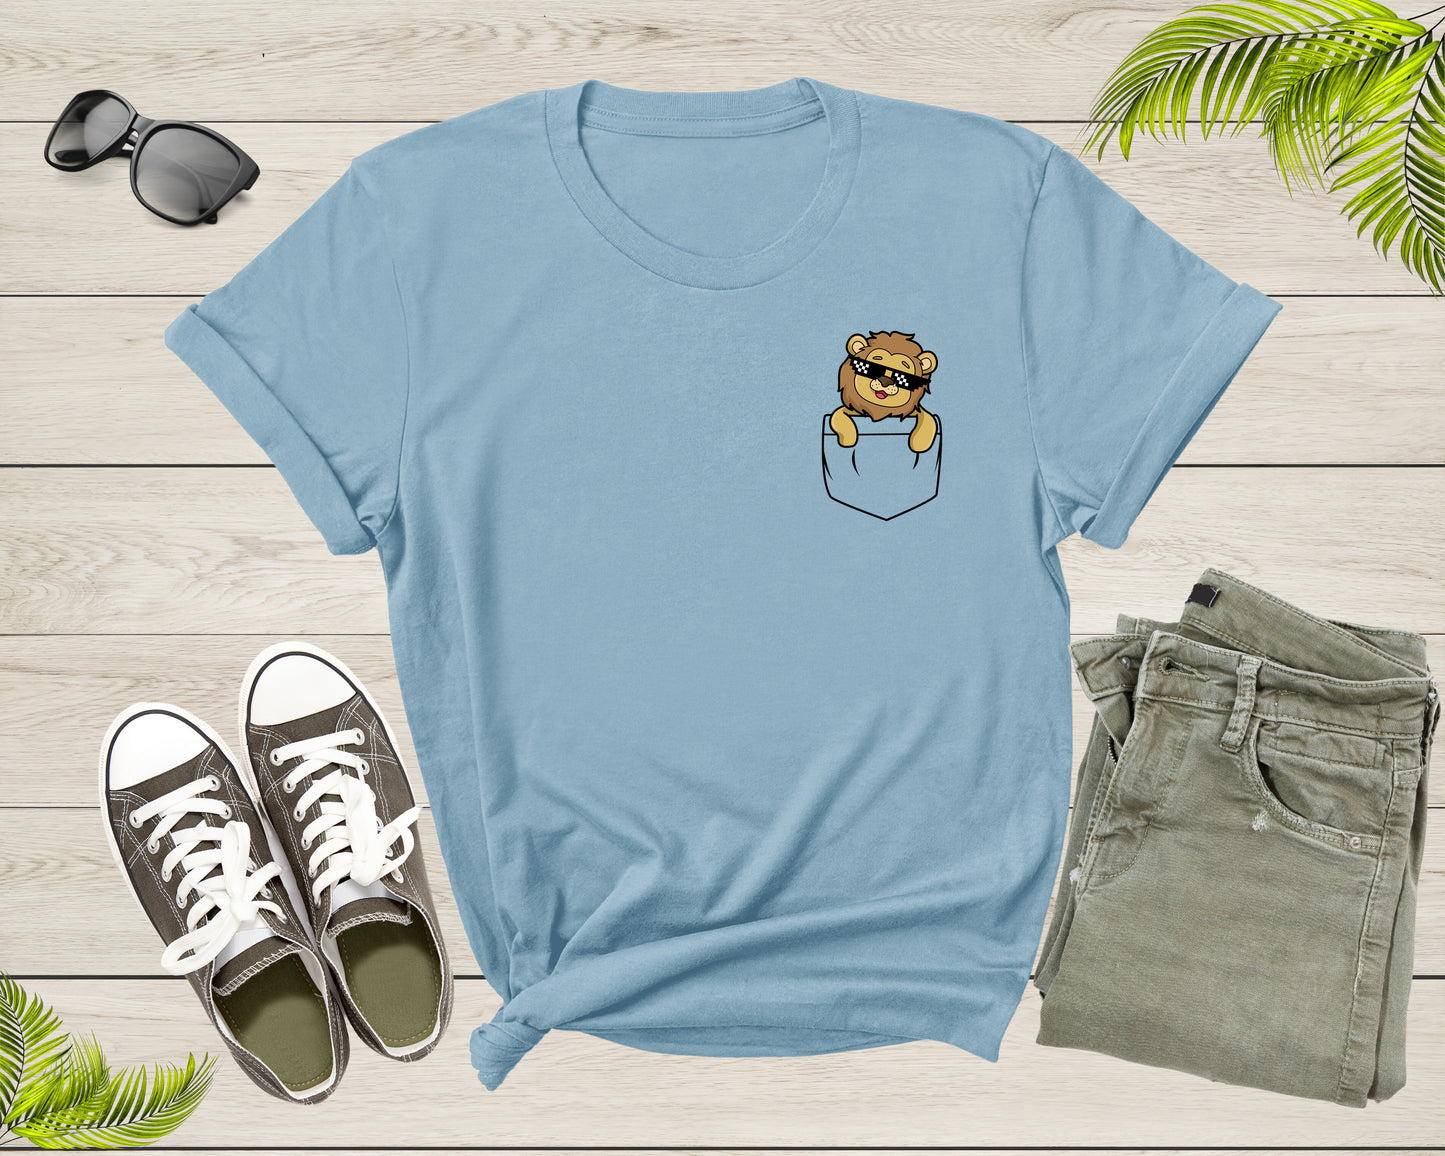 Cool Funny Lion in the Pocket with Meme Sunglasses Animal T-Shirt King Lion T Shirt Gift for Men Women Kids Boys Girls Pocket Lion Tshirt